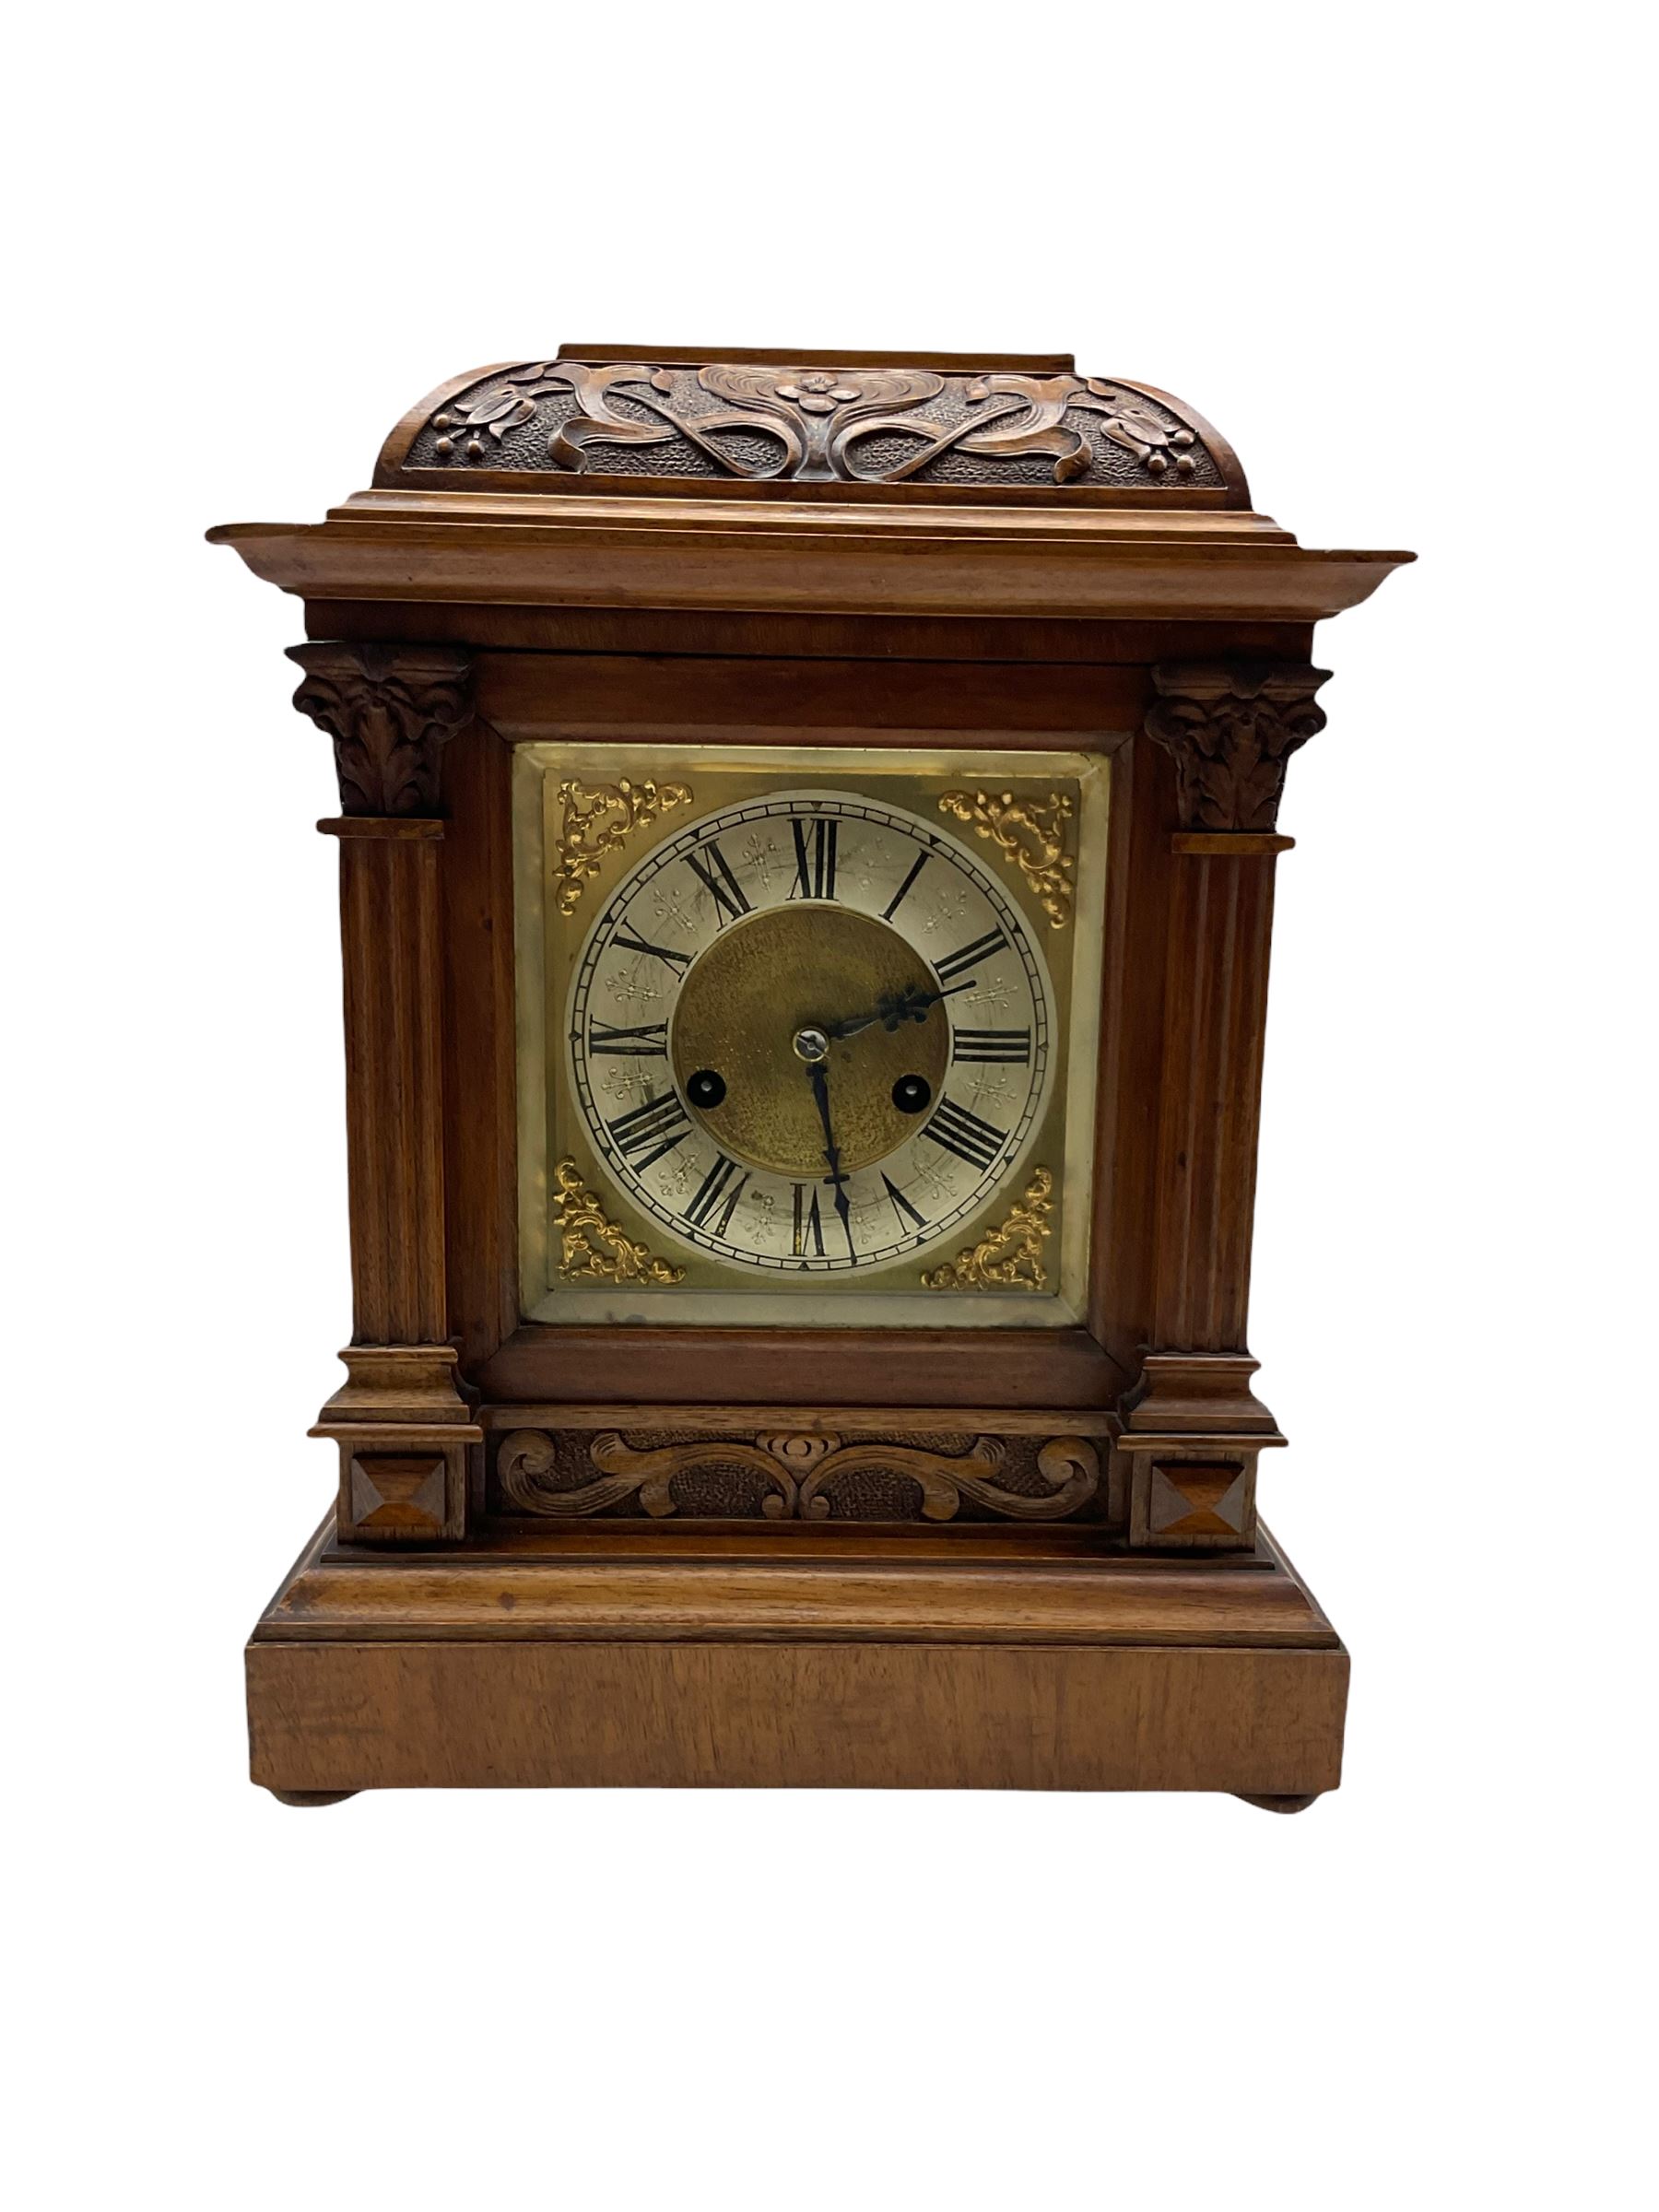 A German mantle clock in an oak case manufactured by HAC (Hamburg American Clock Company) c 1890